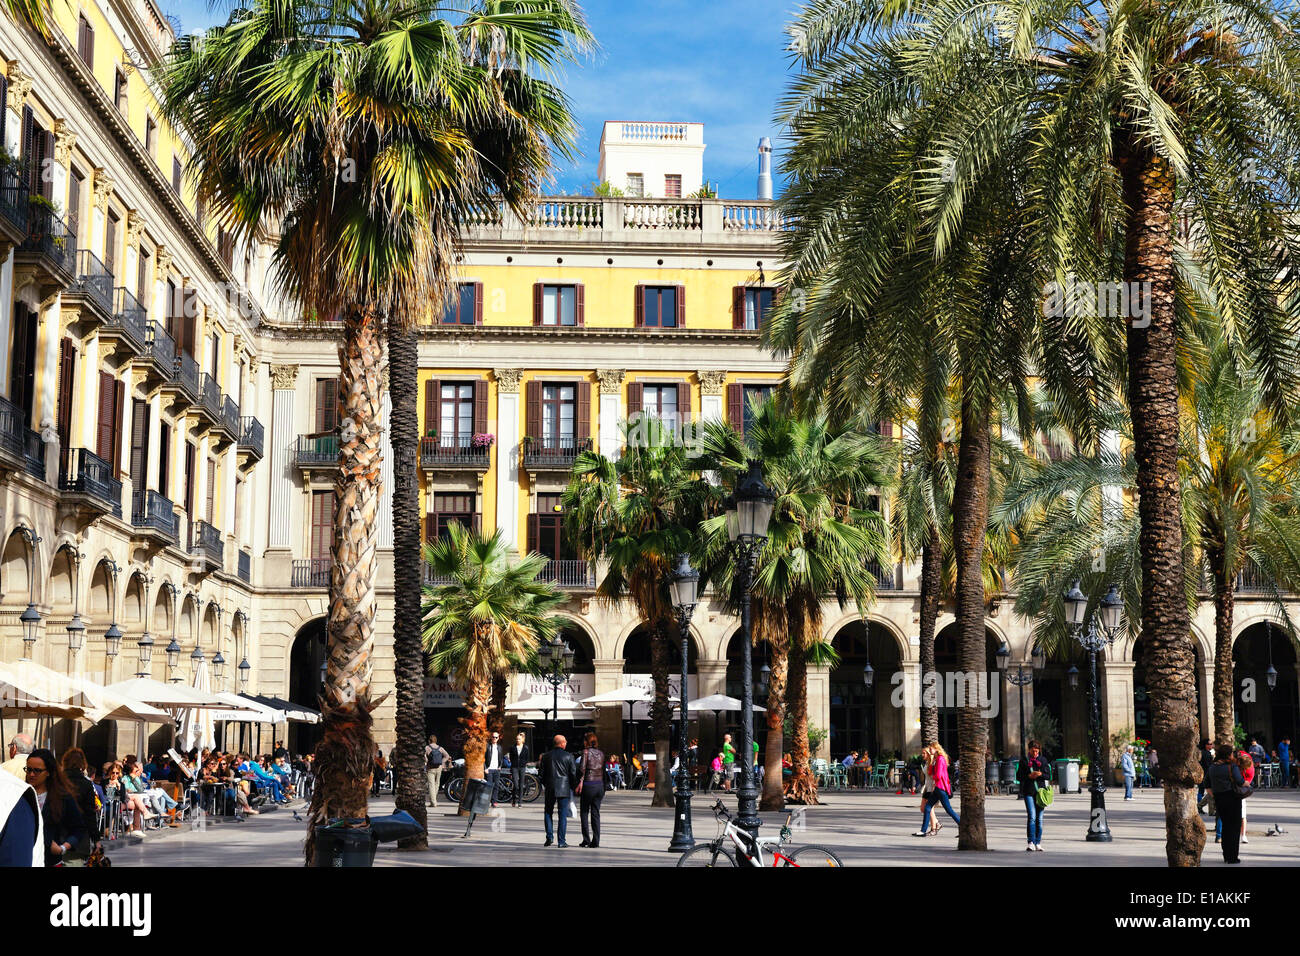 Palmen und Sidwewalk Cafés, Plaza Royal, Barcelona, Katalonien, Spanien Stockfoto